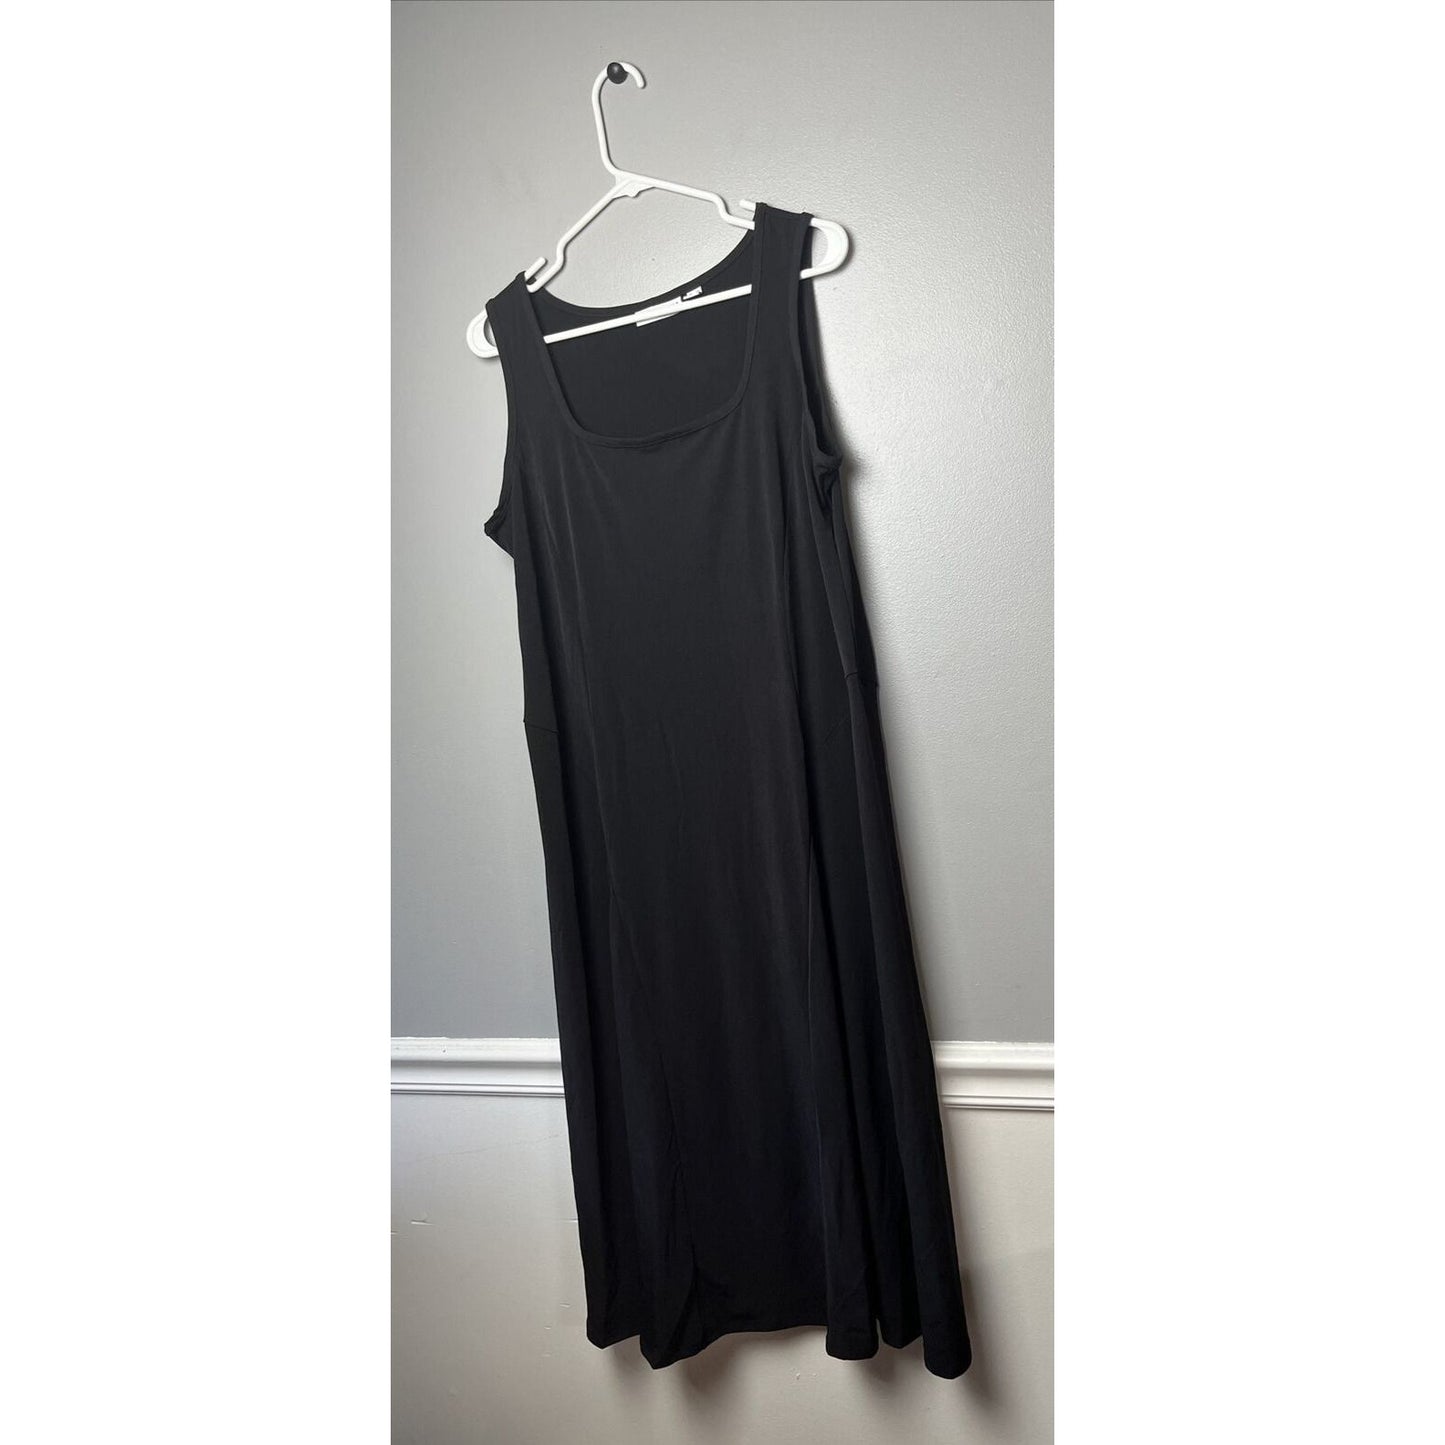 Susan Graver Liquid Knit Sleeveless Midi Dress- Black, PETITE L A480678